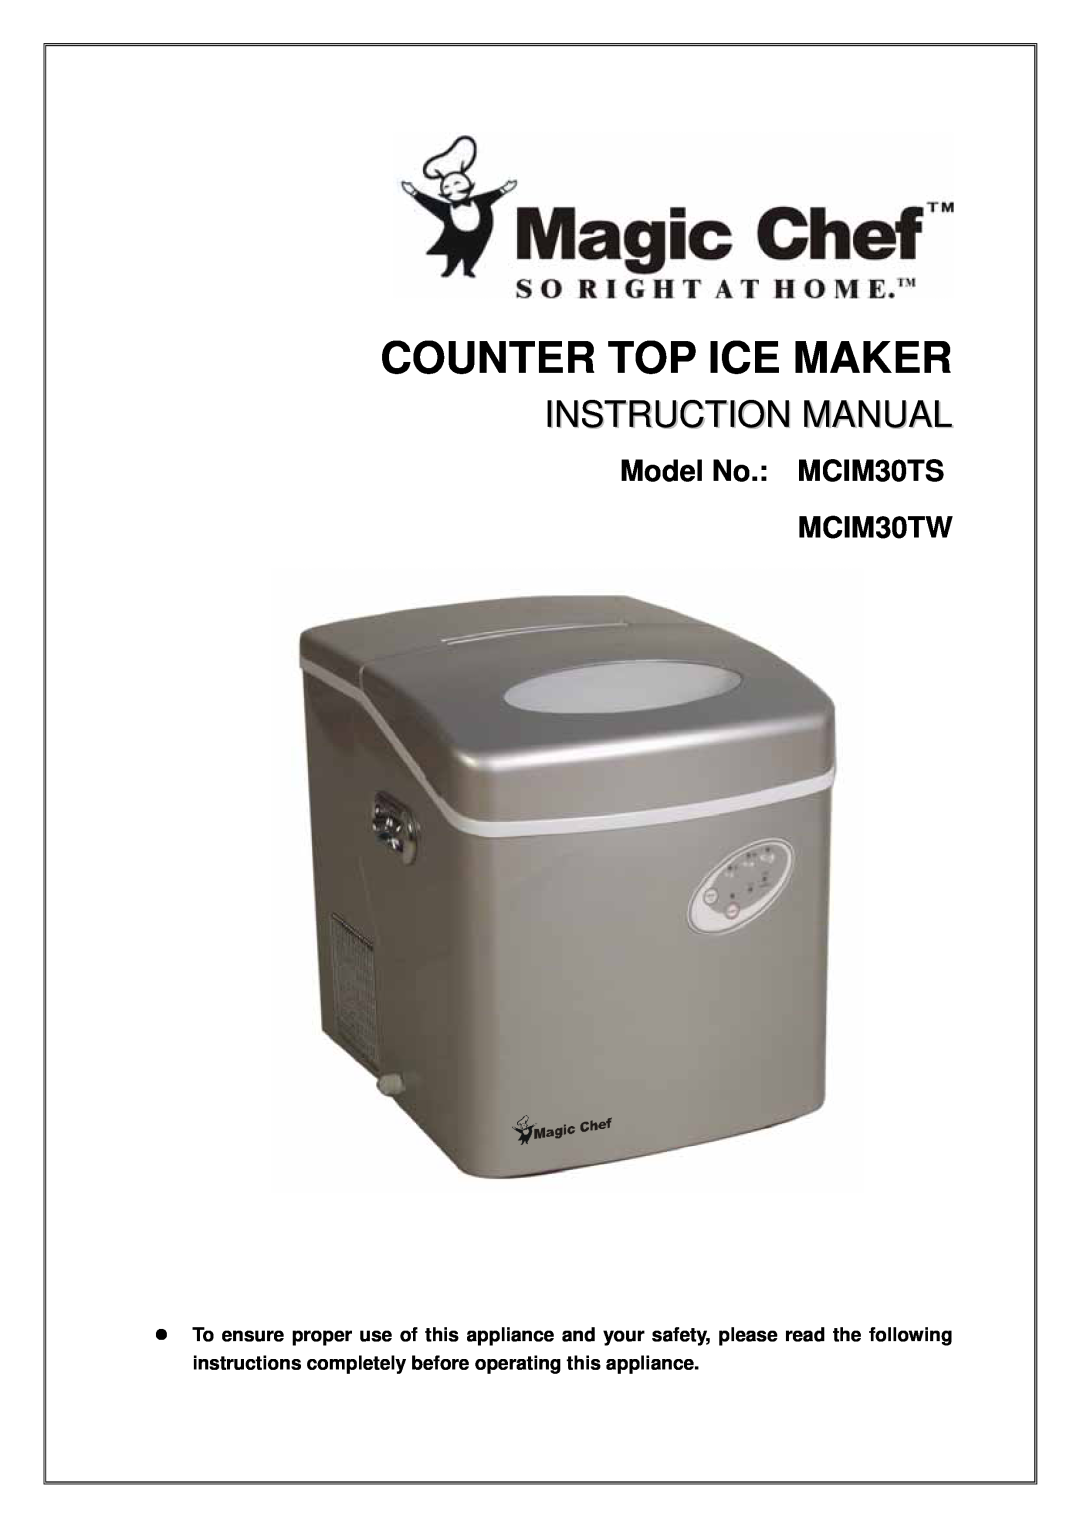 Magic Chef manual Model No. MCIM30TS MCIM30TW, Counter Top Ice Maker 